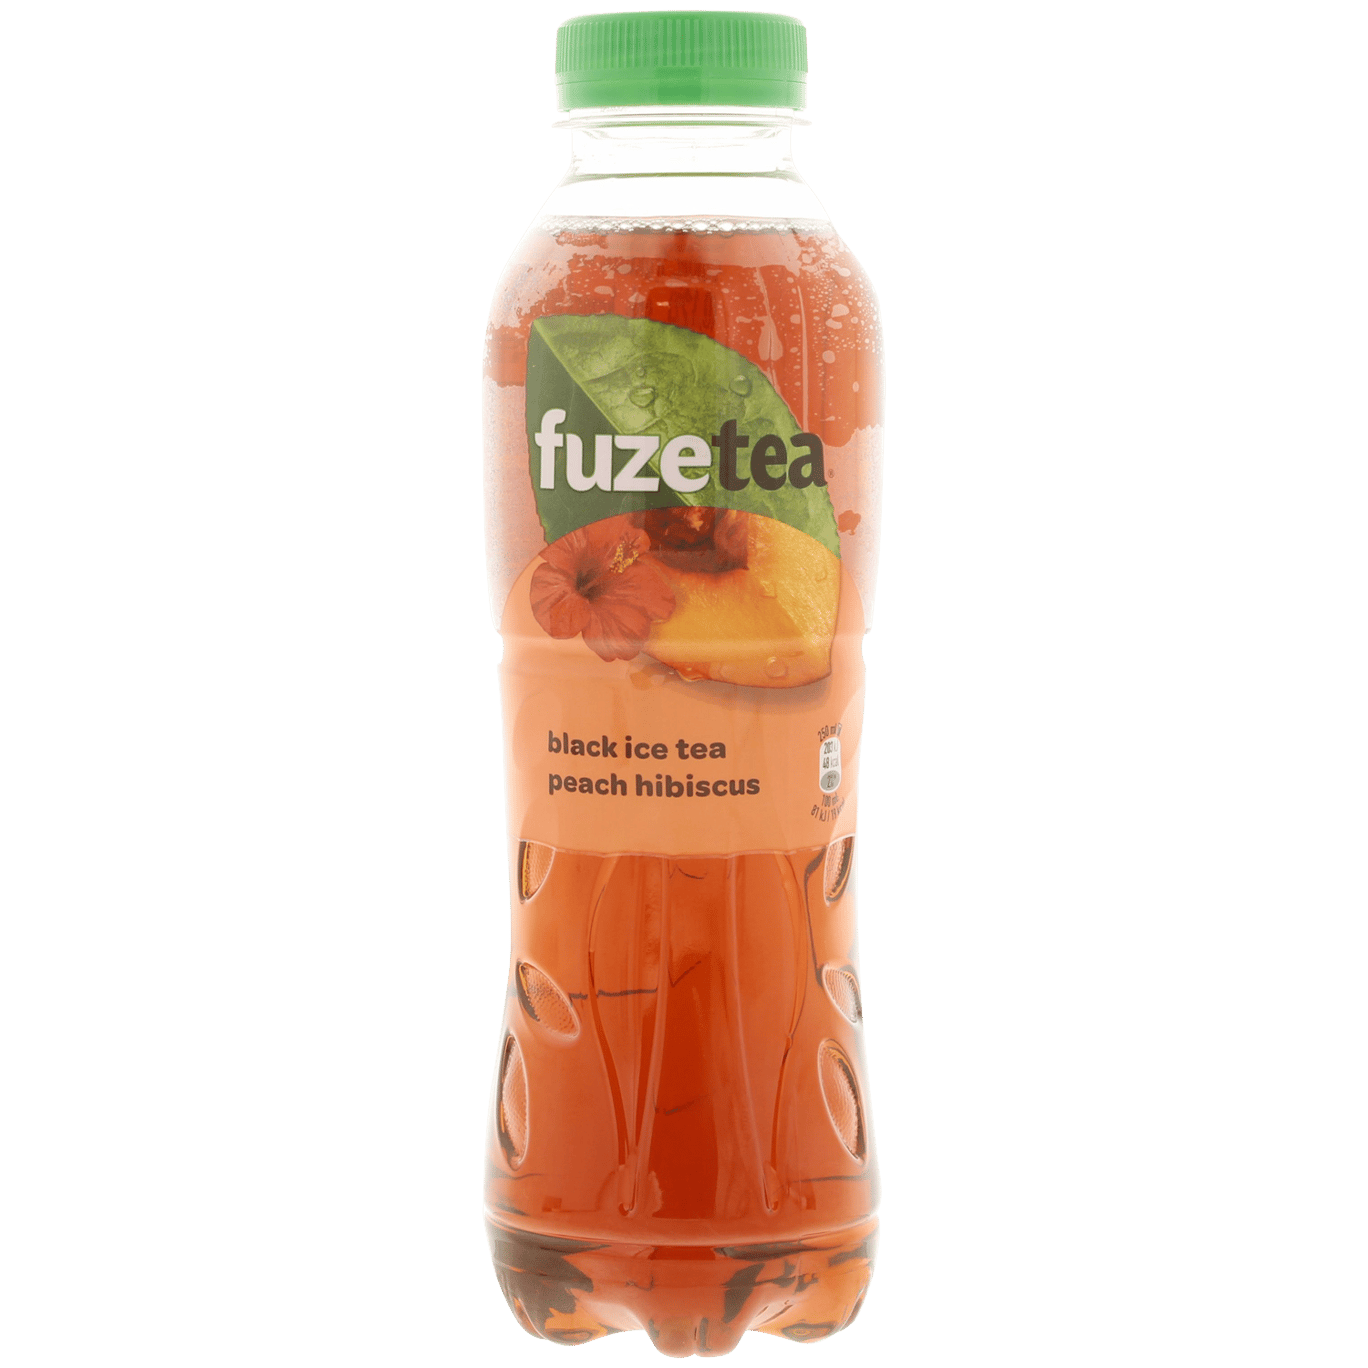 Fuze Tea ice tea Peach Hibiscus